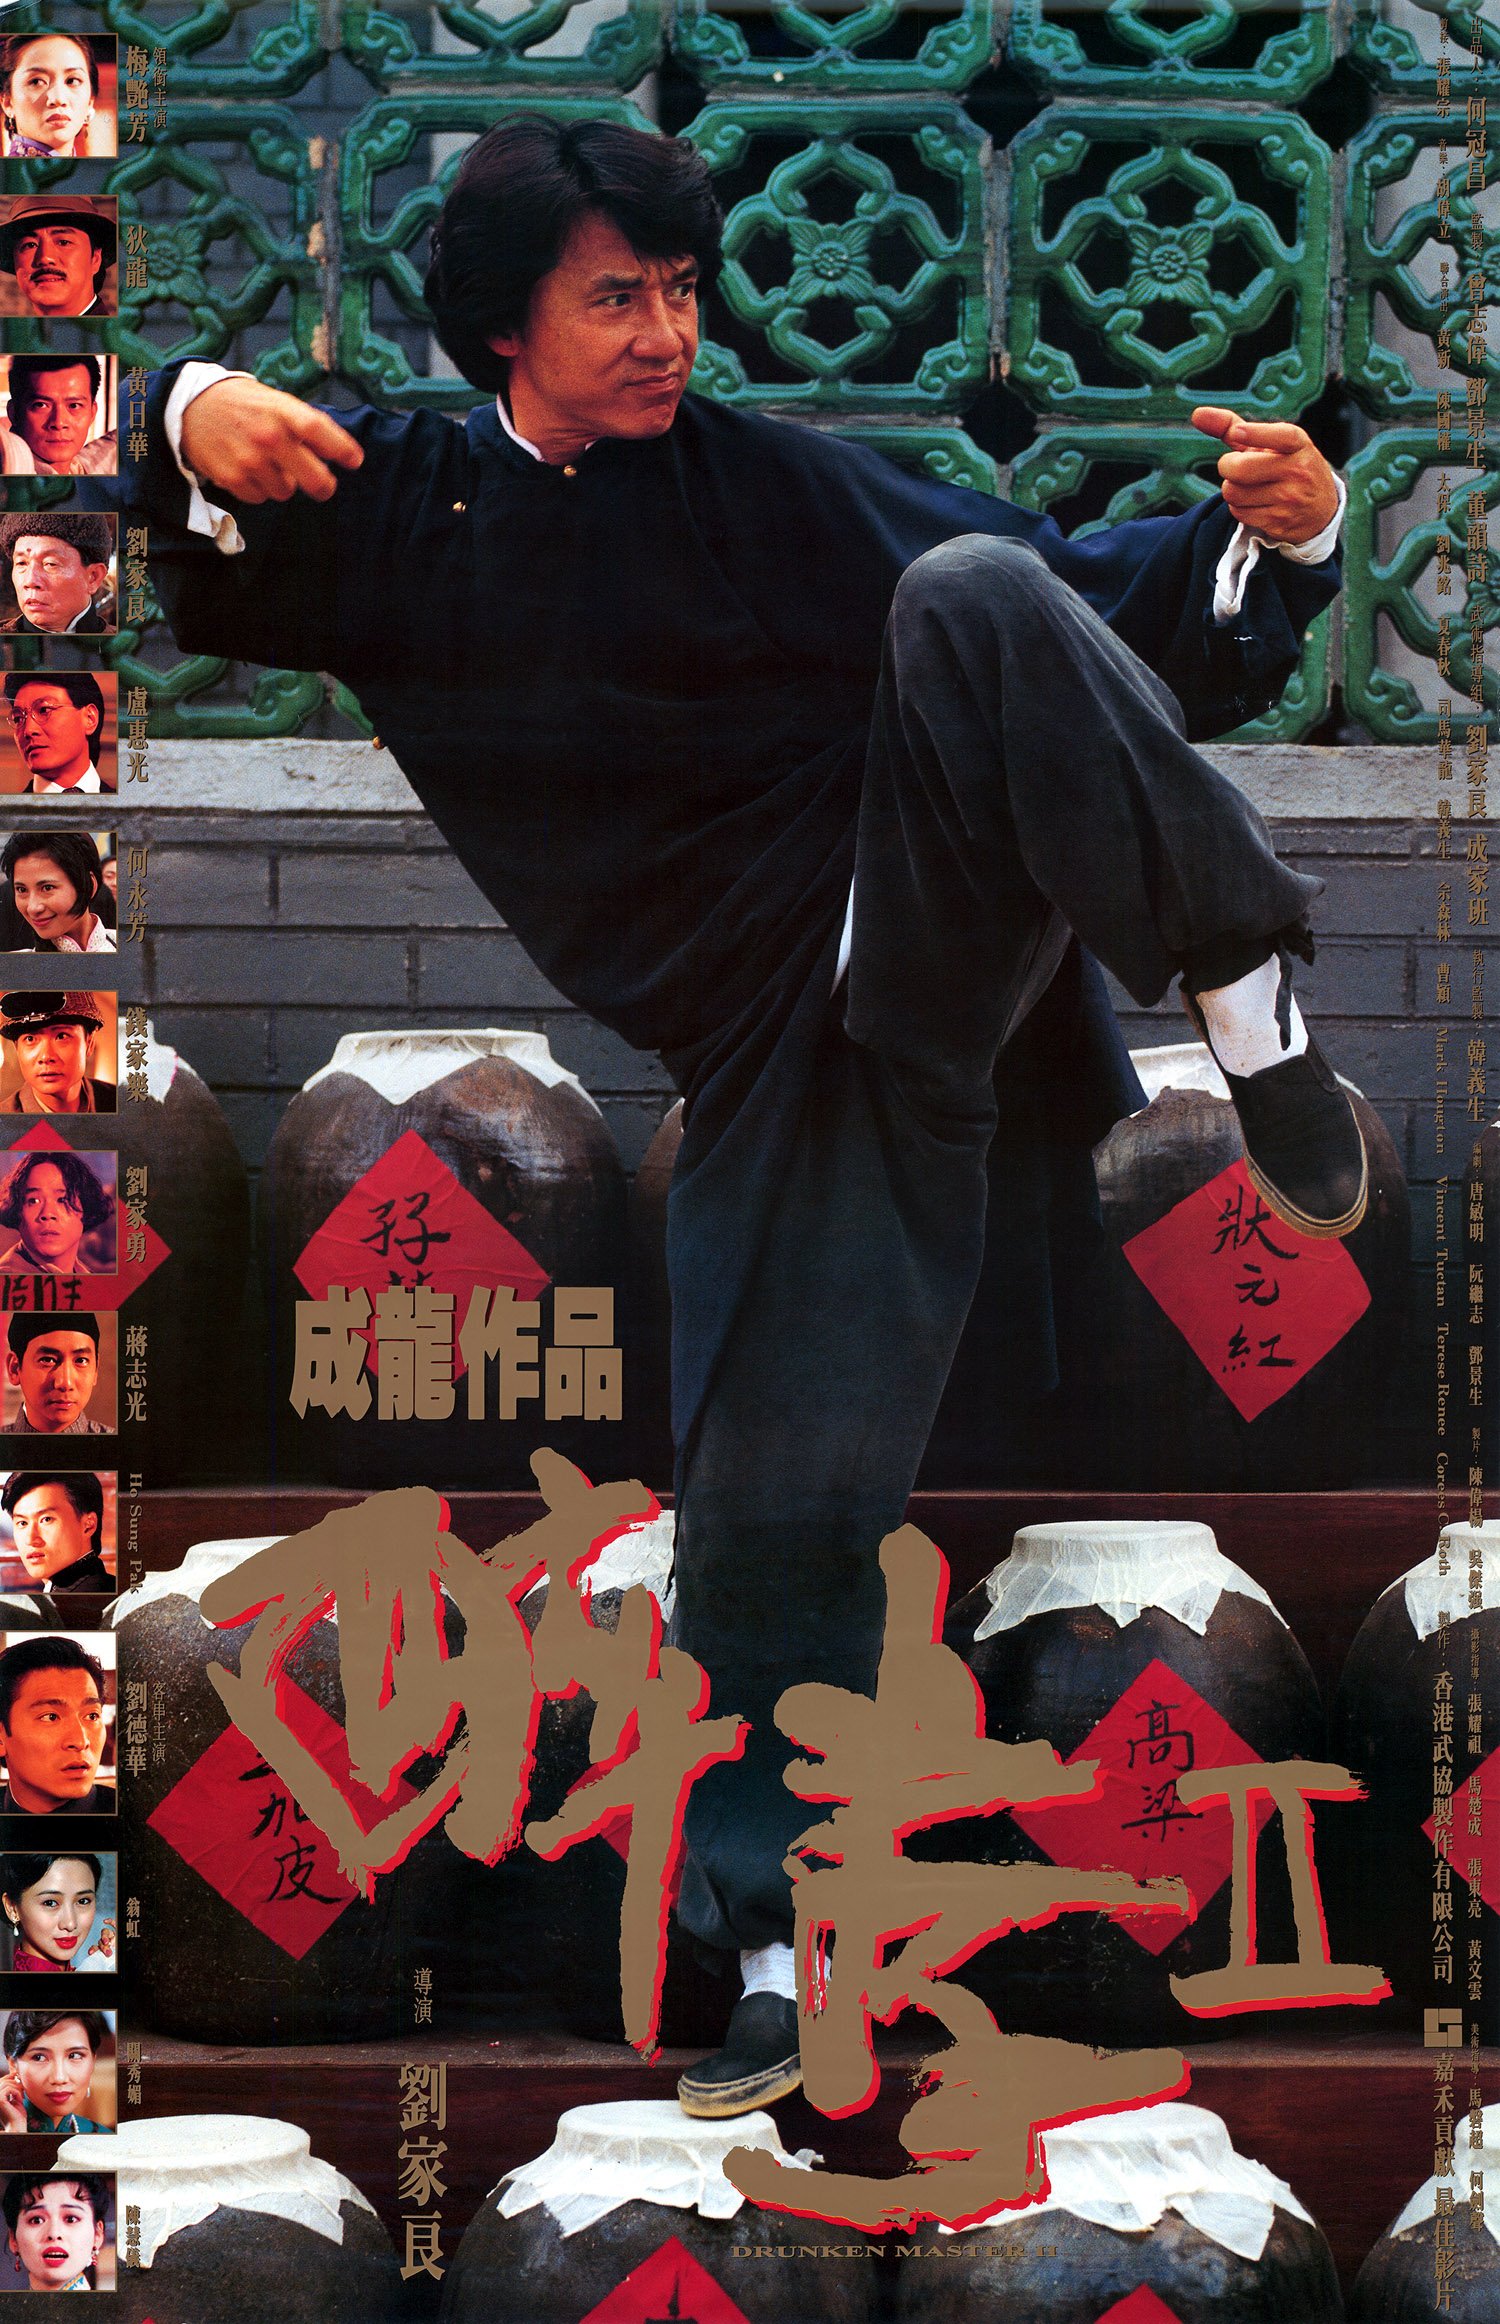   Original Hong Kong release poster for Drunken Master II  